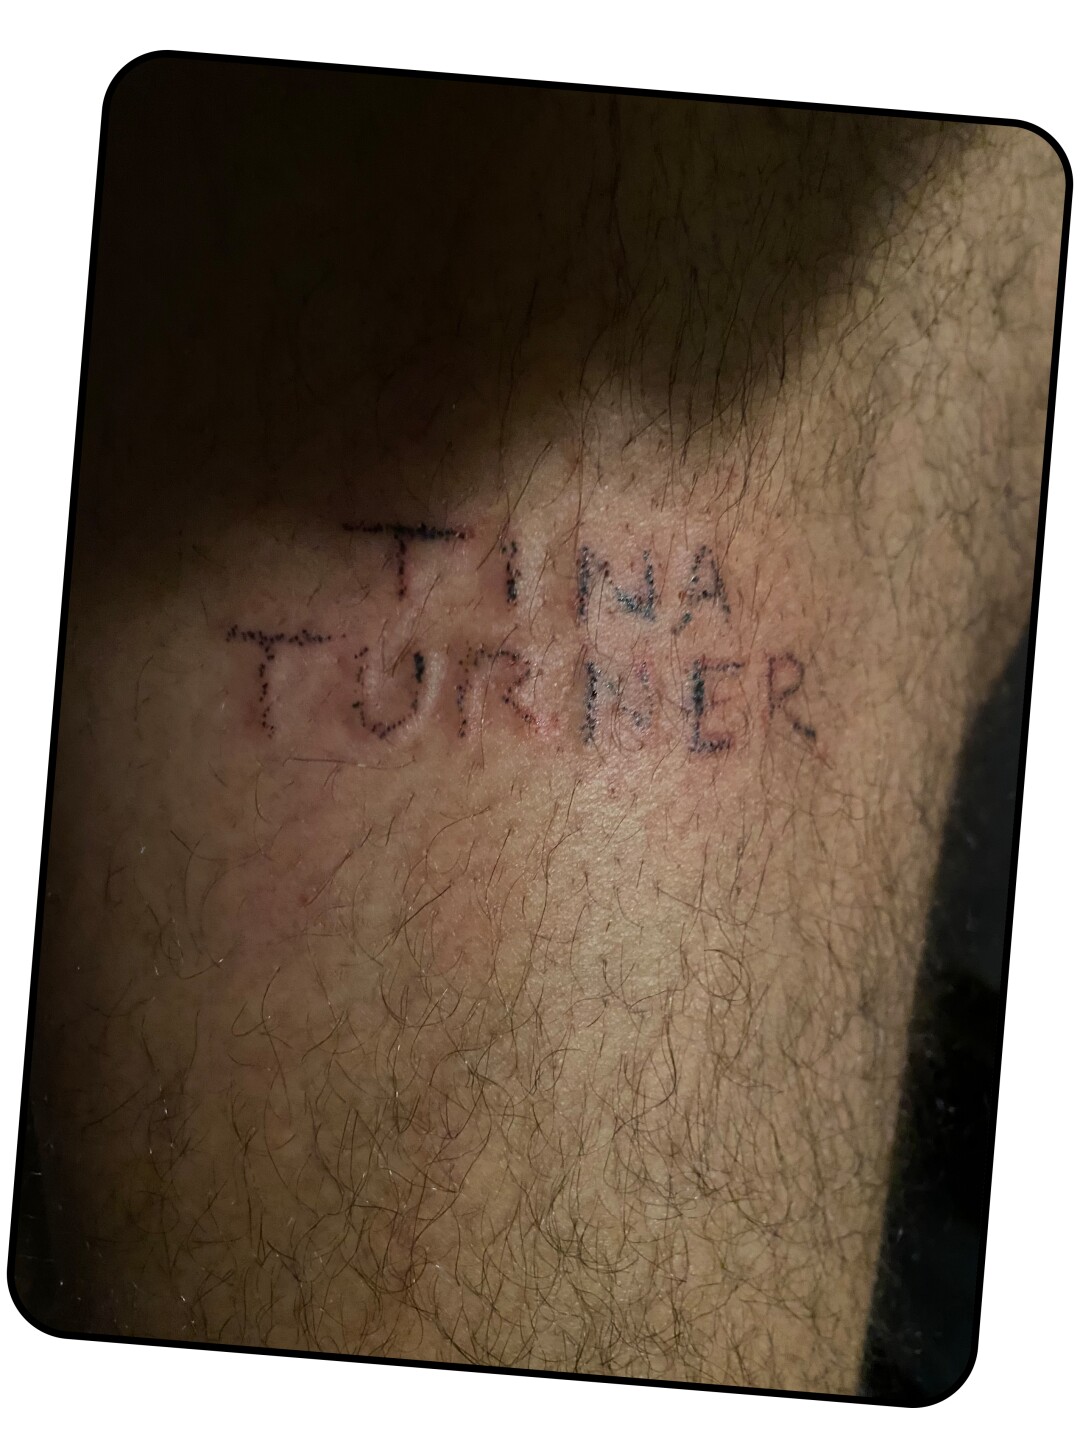 A thigh tattoo that says "Tina Turner."